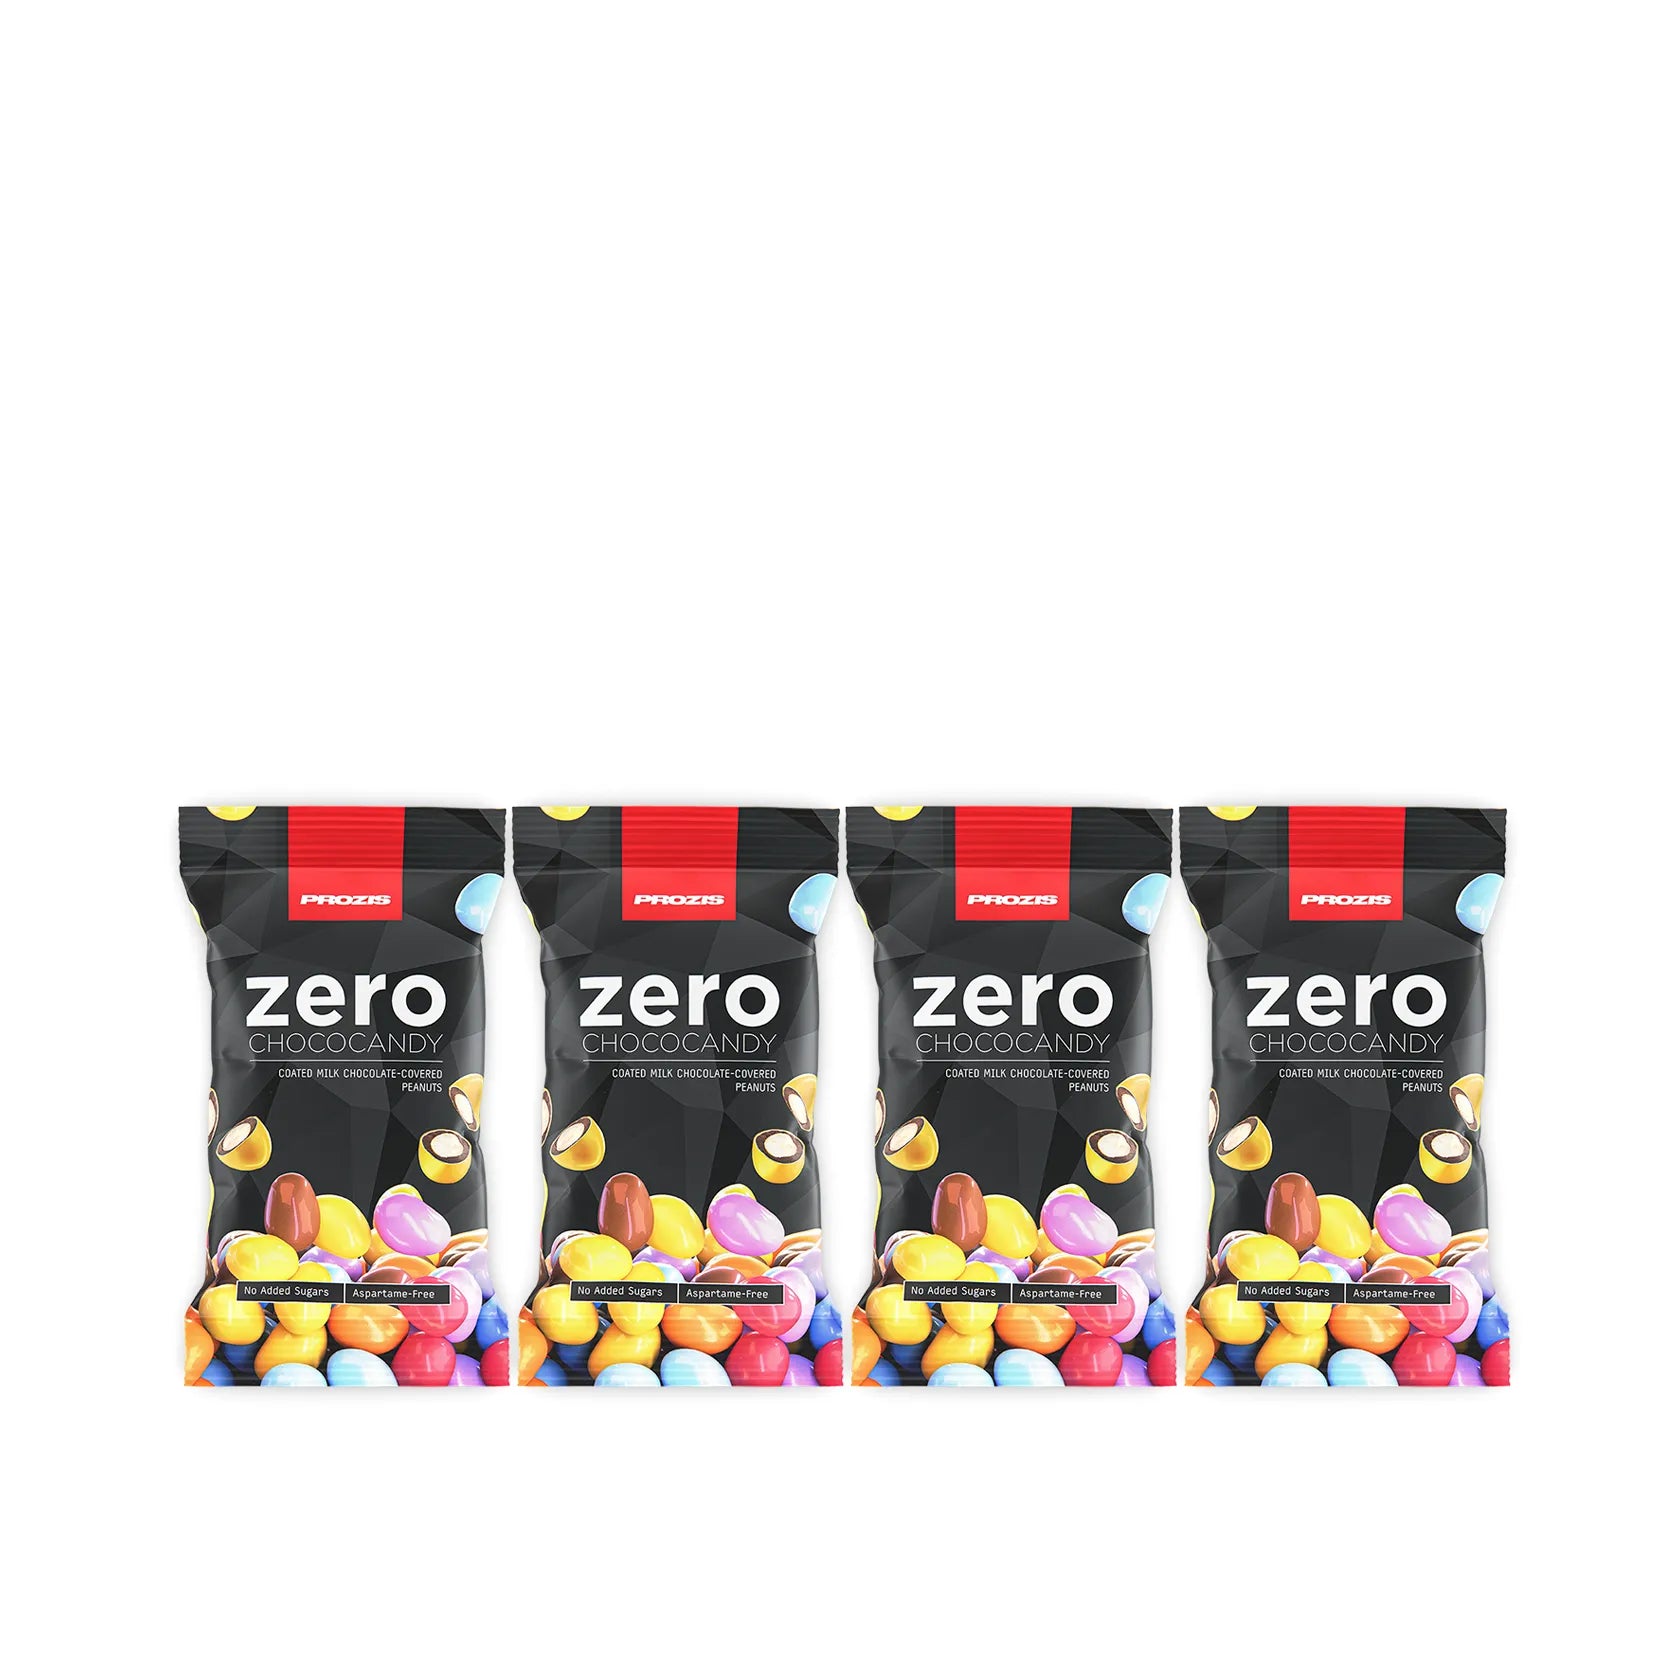 Prozis Chocolate Zero Chococandy 40 gr - Pack 4 x 40 gr